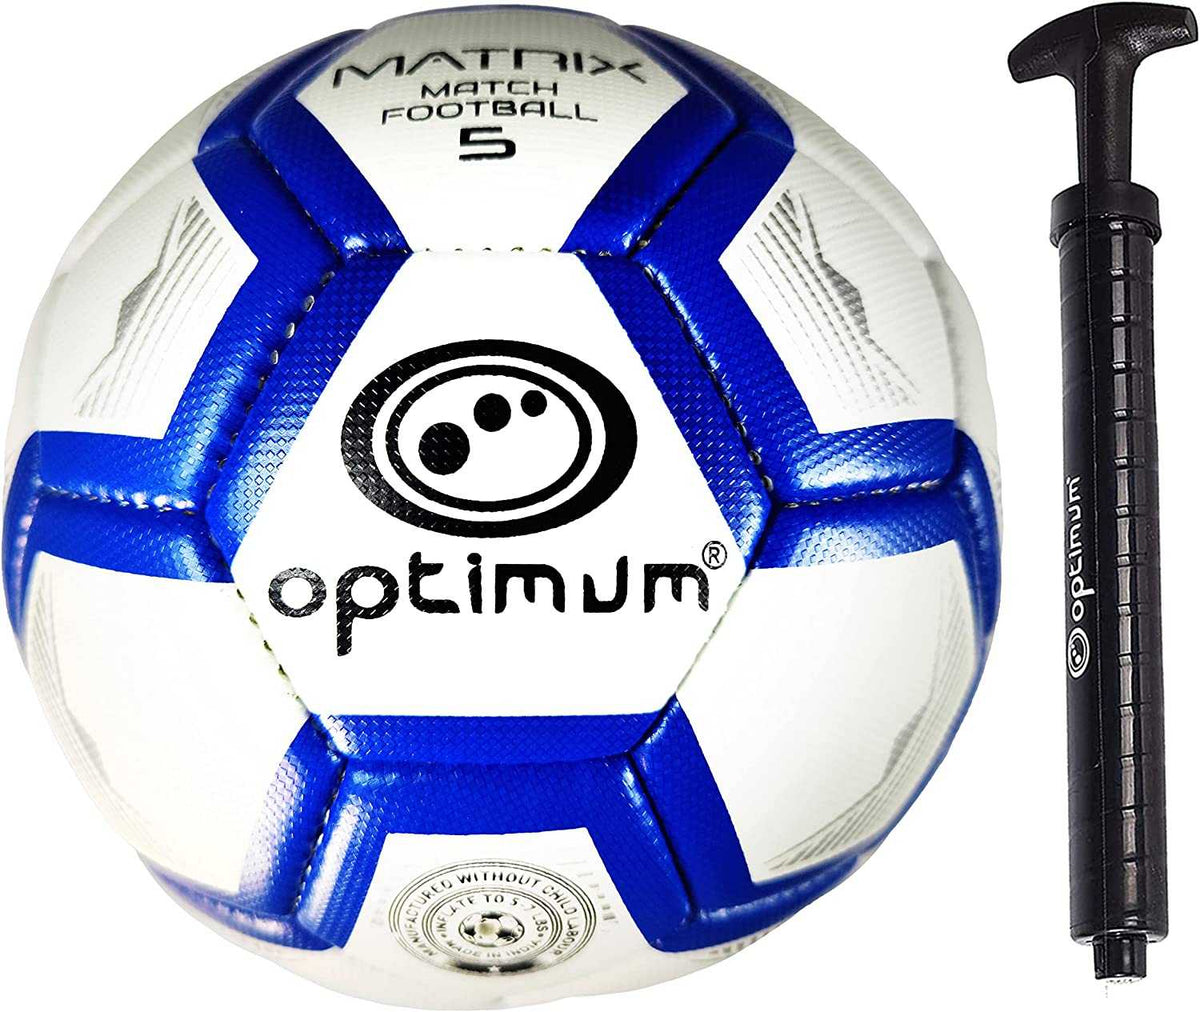 Optimum Match Quality Football Balls Official Size and Weight - Optimum